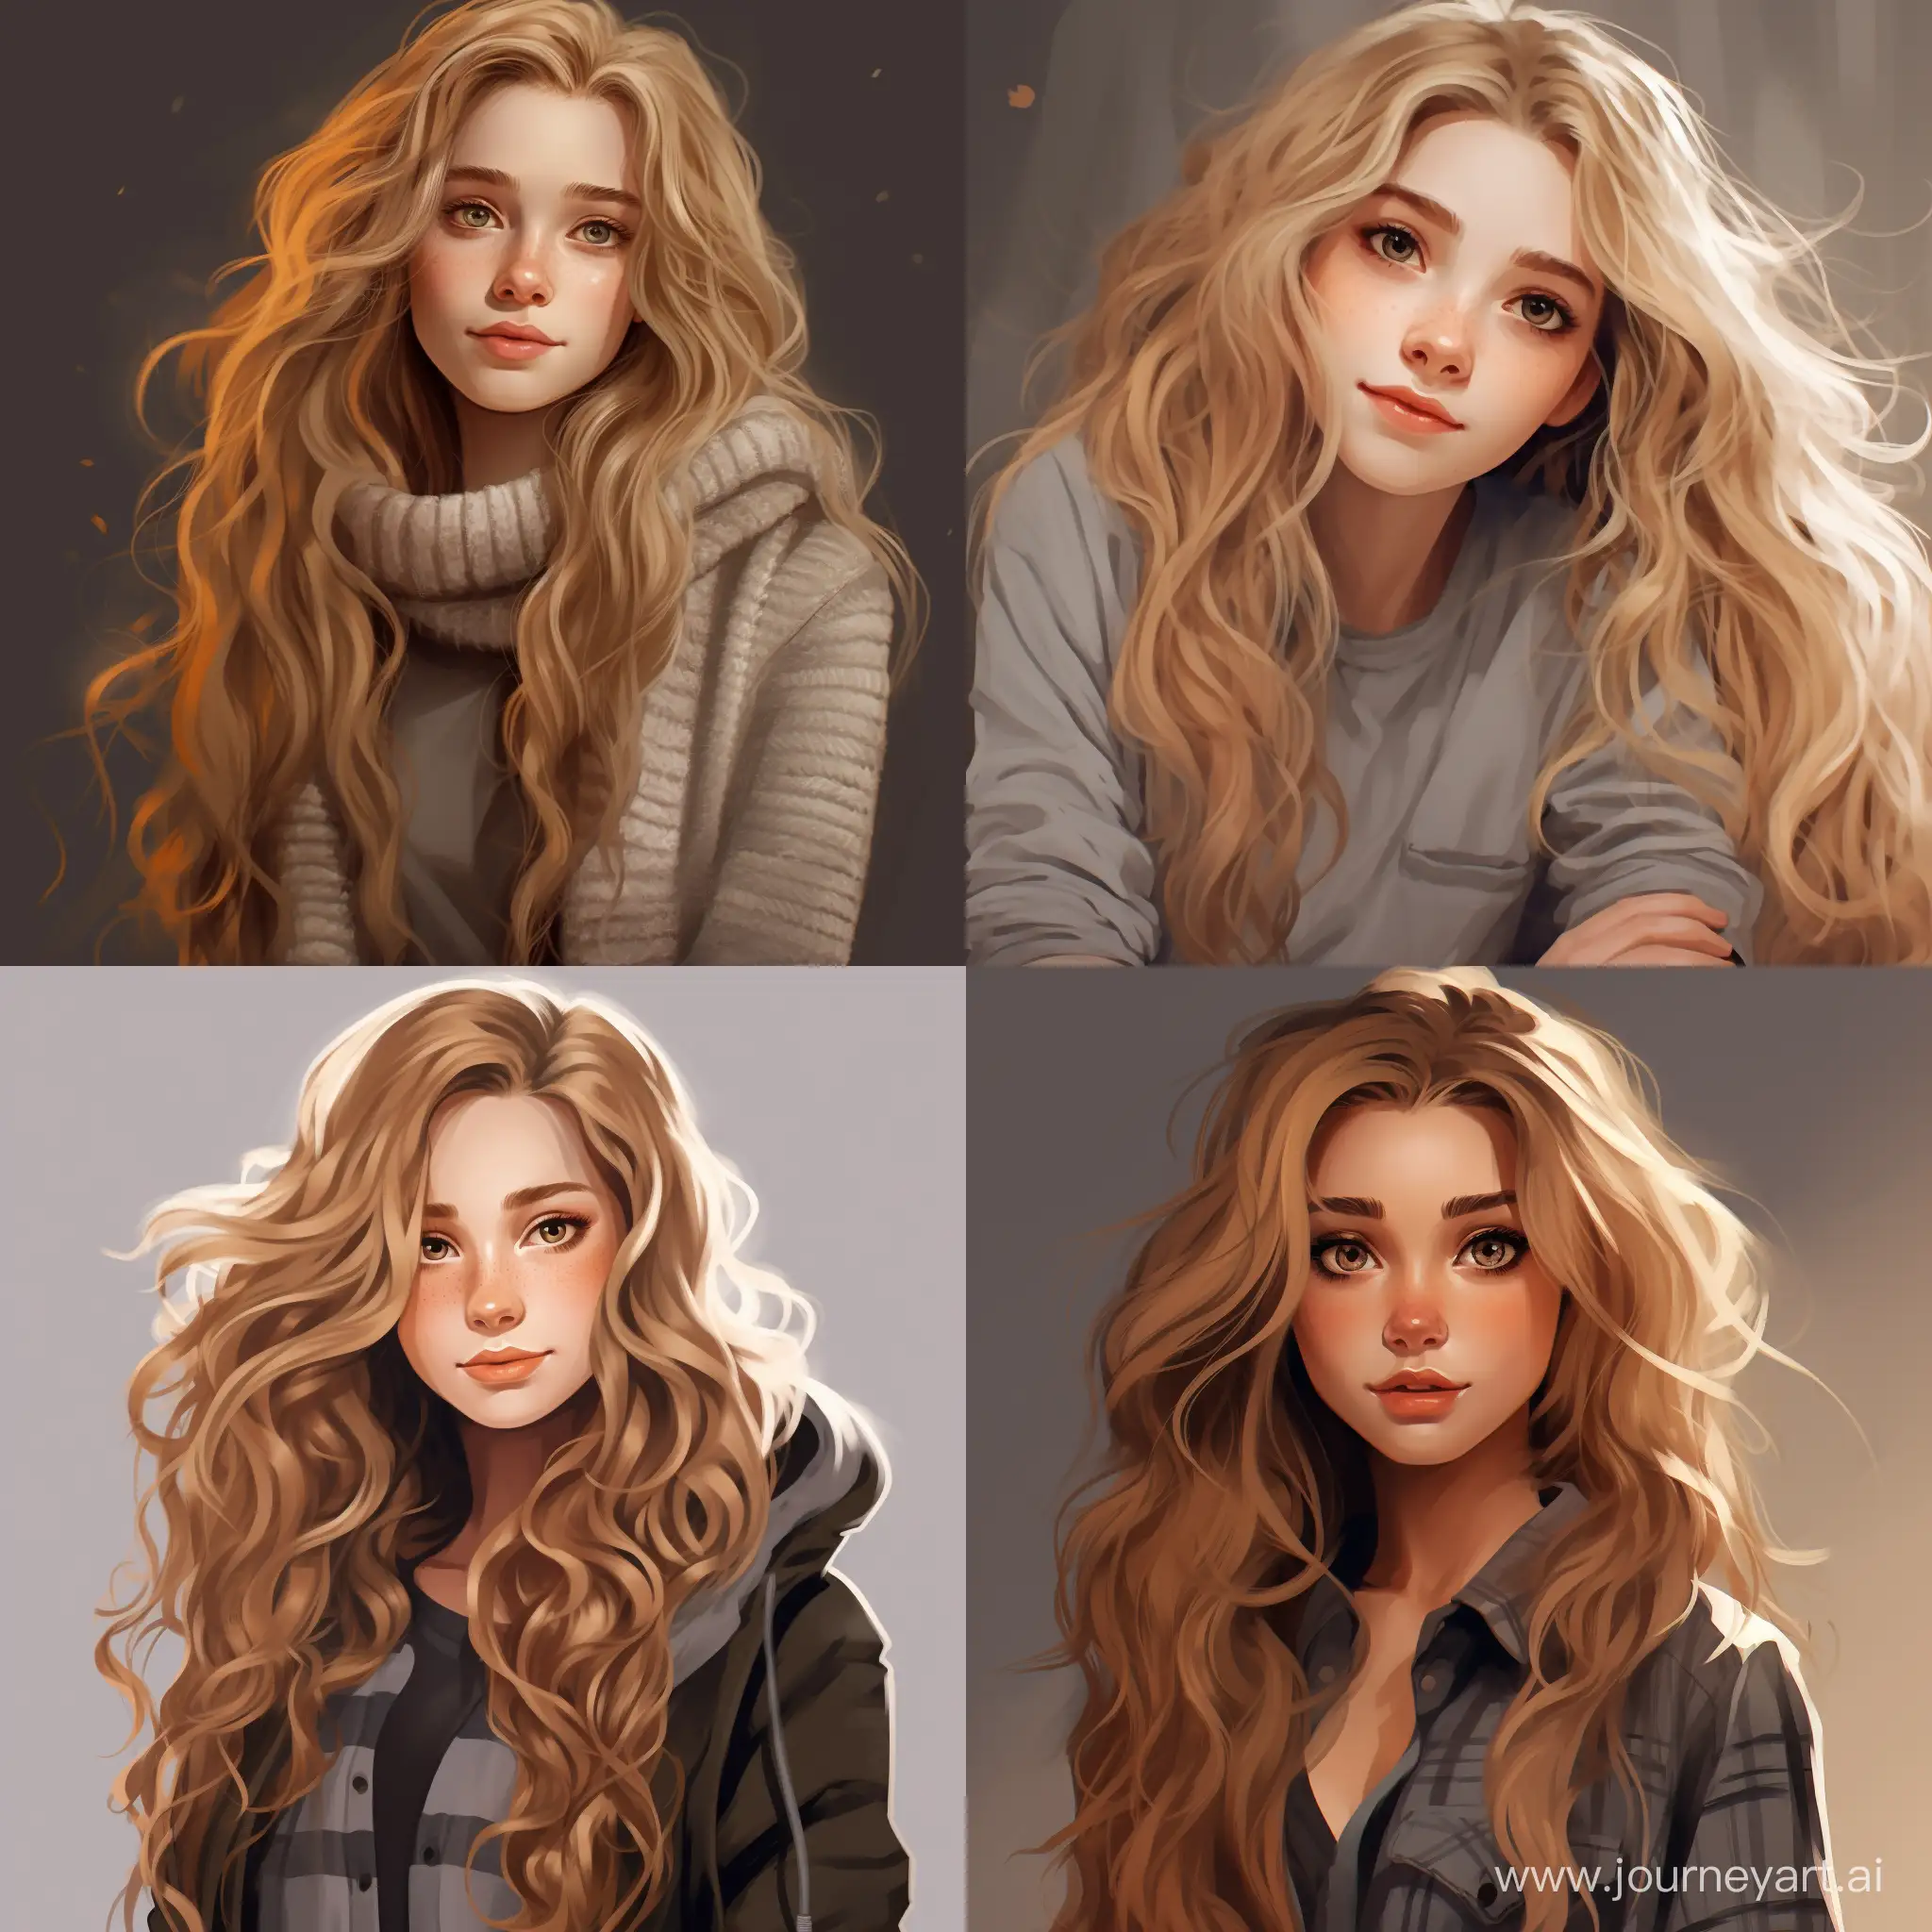 Charming-Teenage-Girl-with-Golden-Hair-in-Cozy-Cartoon-Art